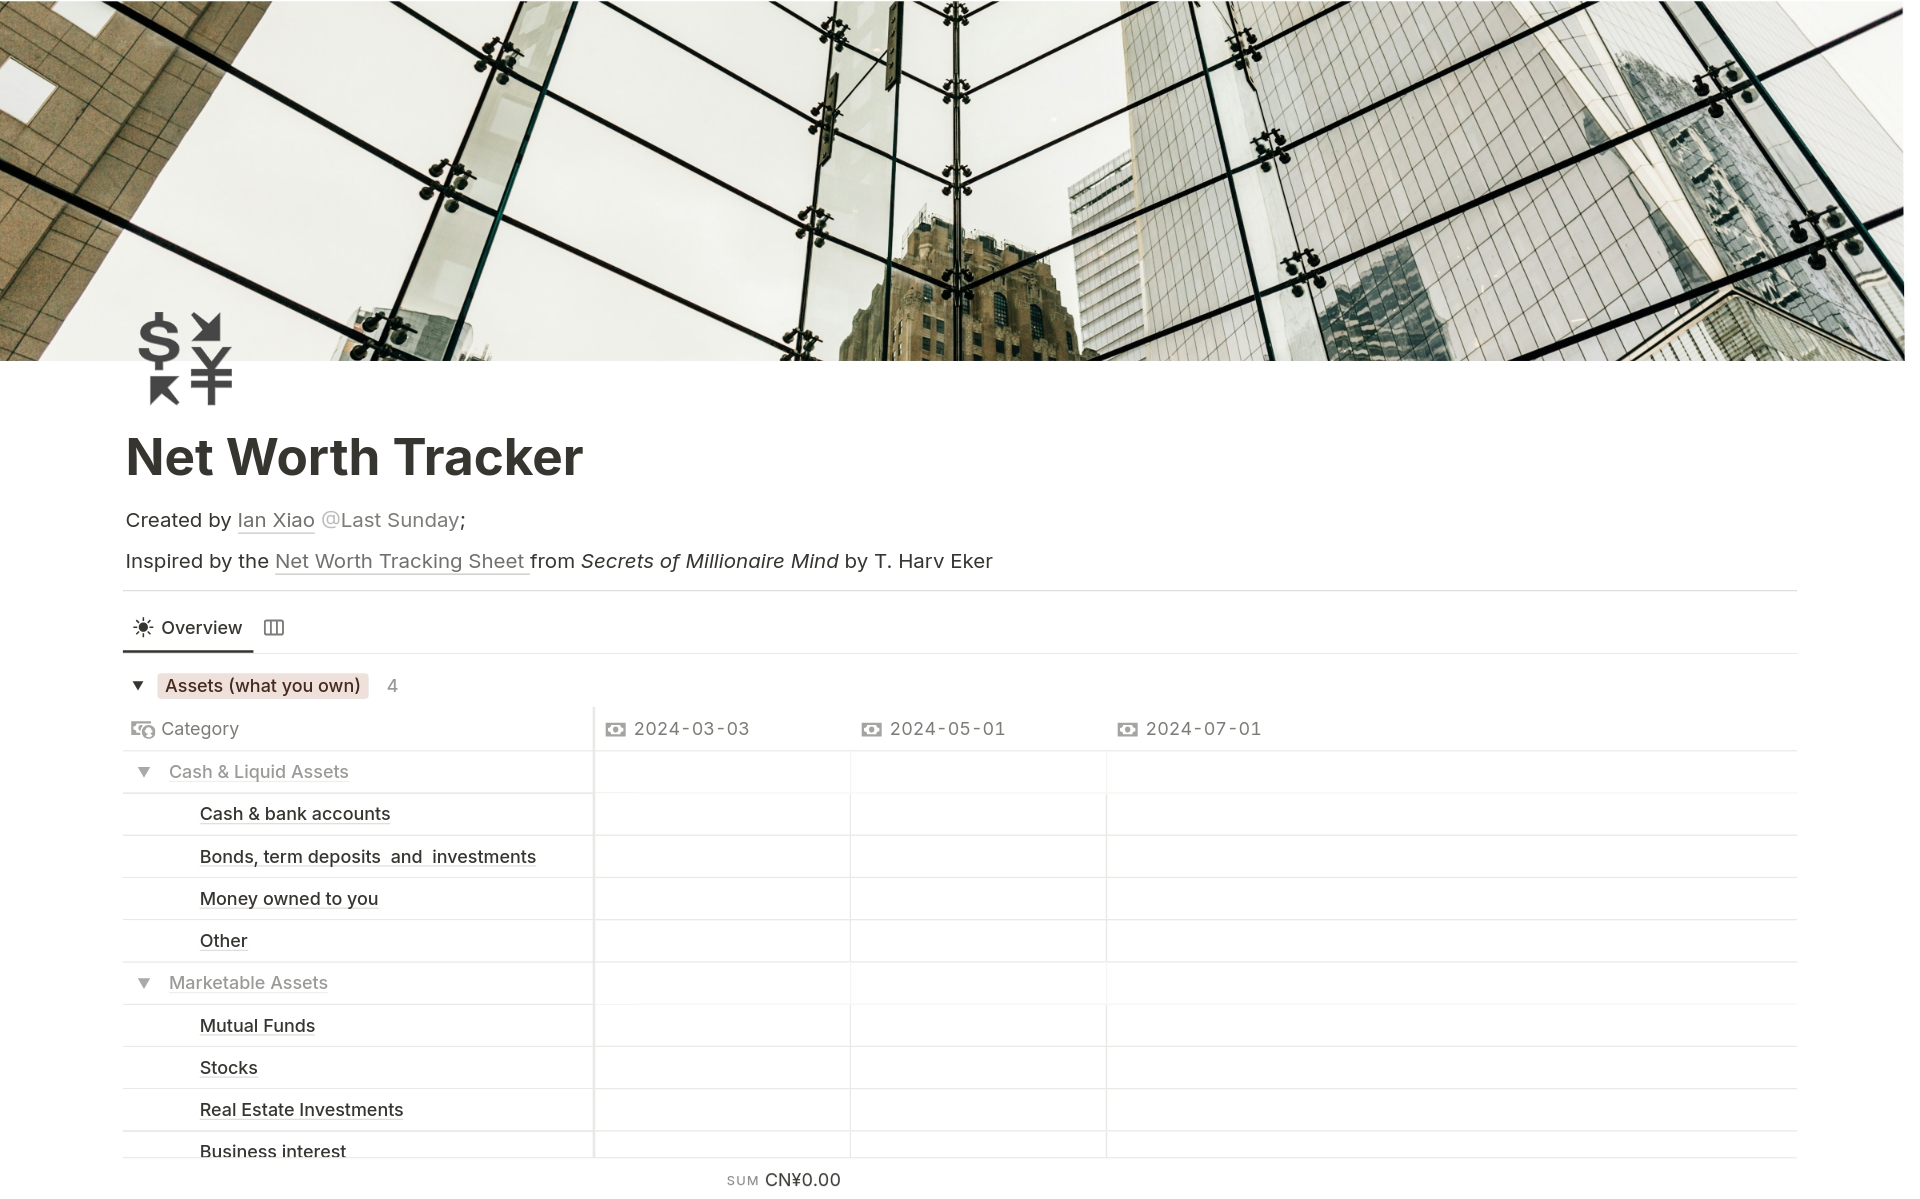 Vista previa de plantilla para Net Worth Tracker